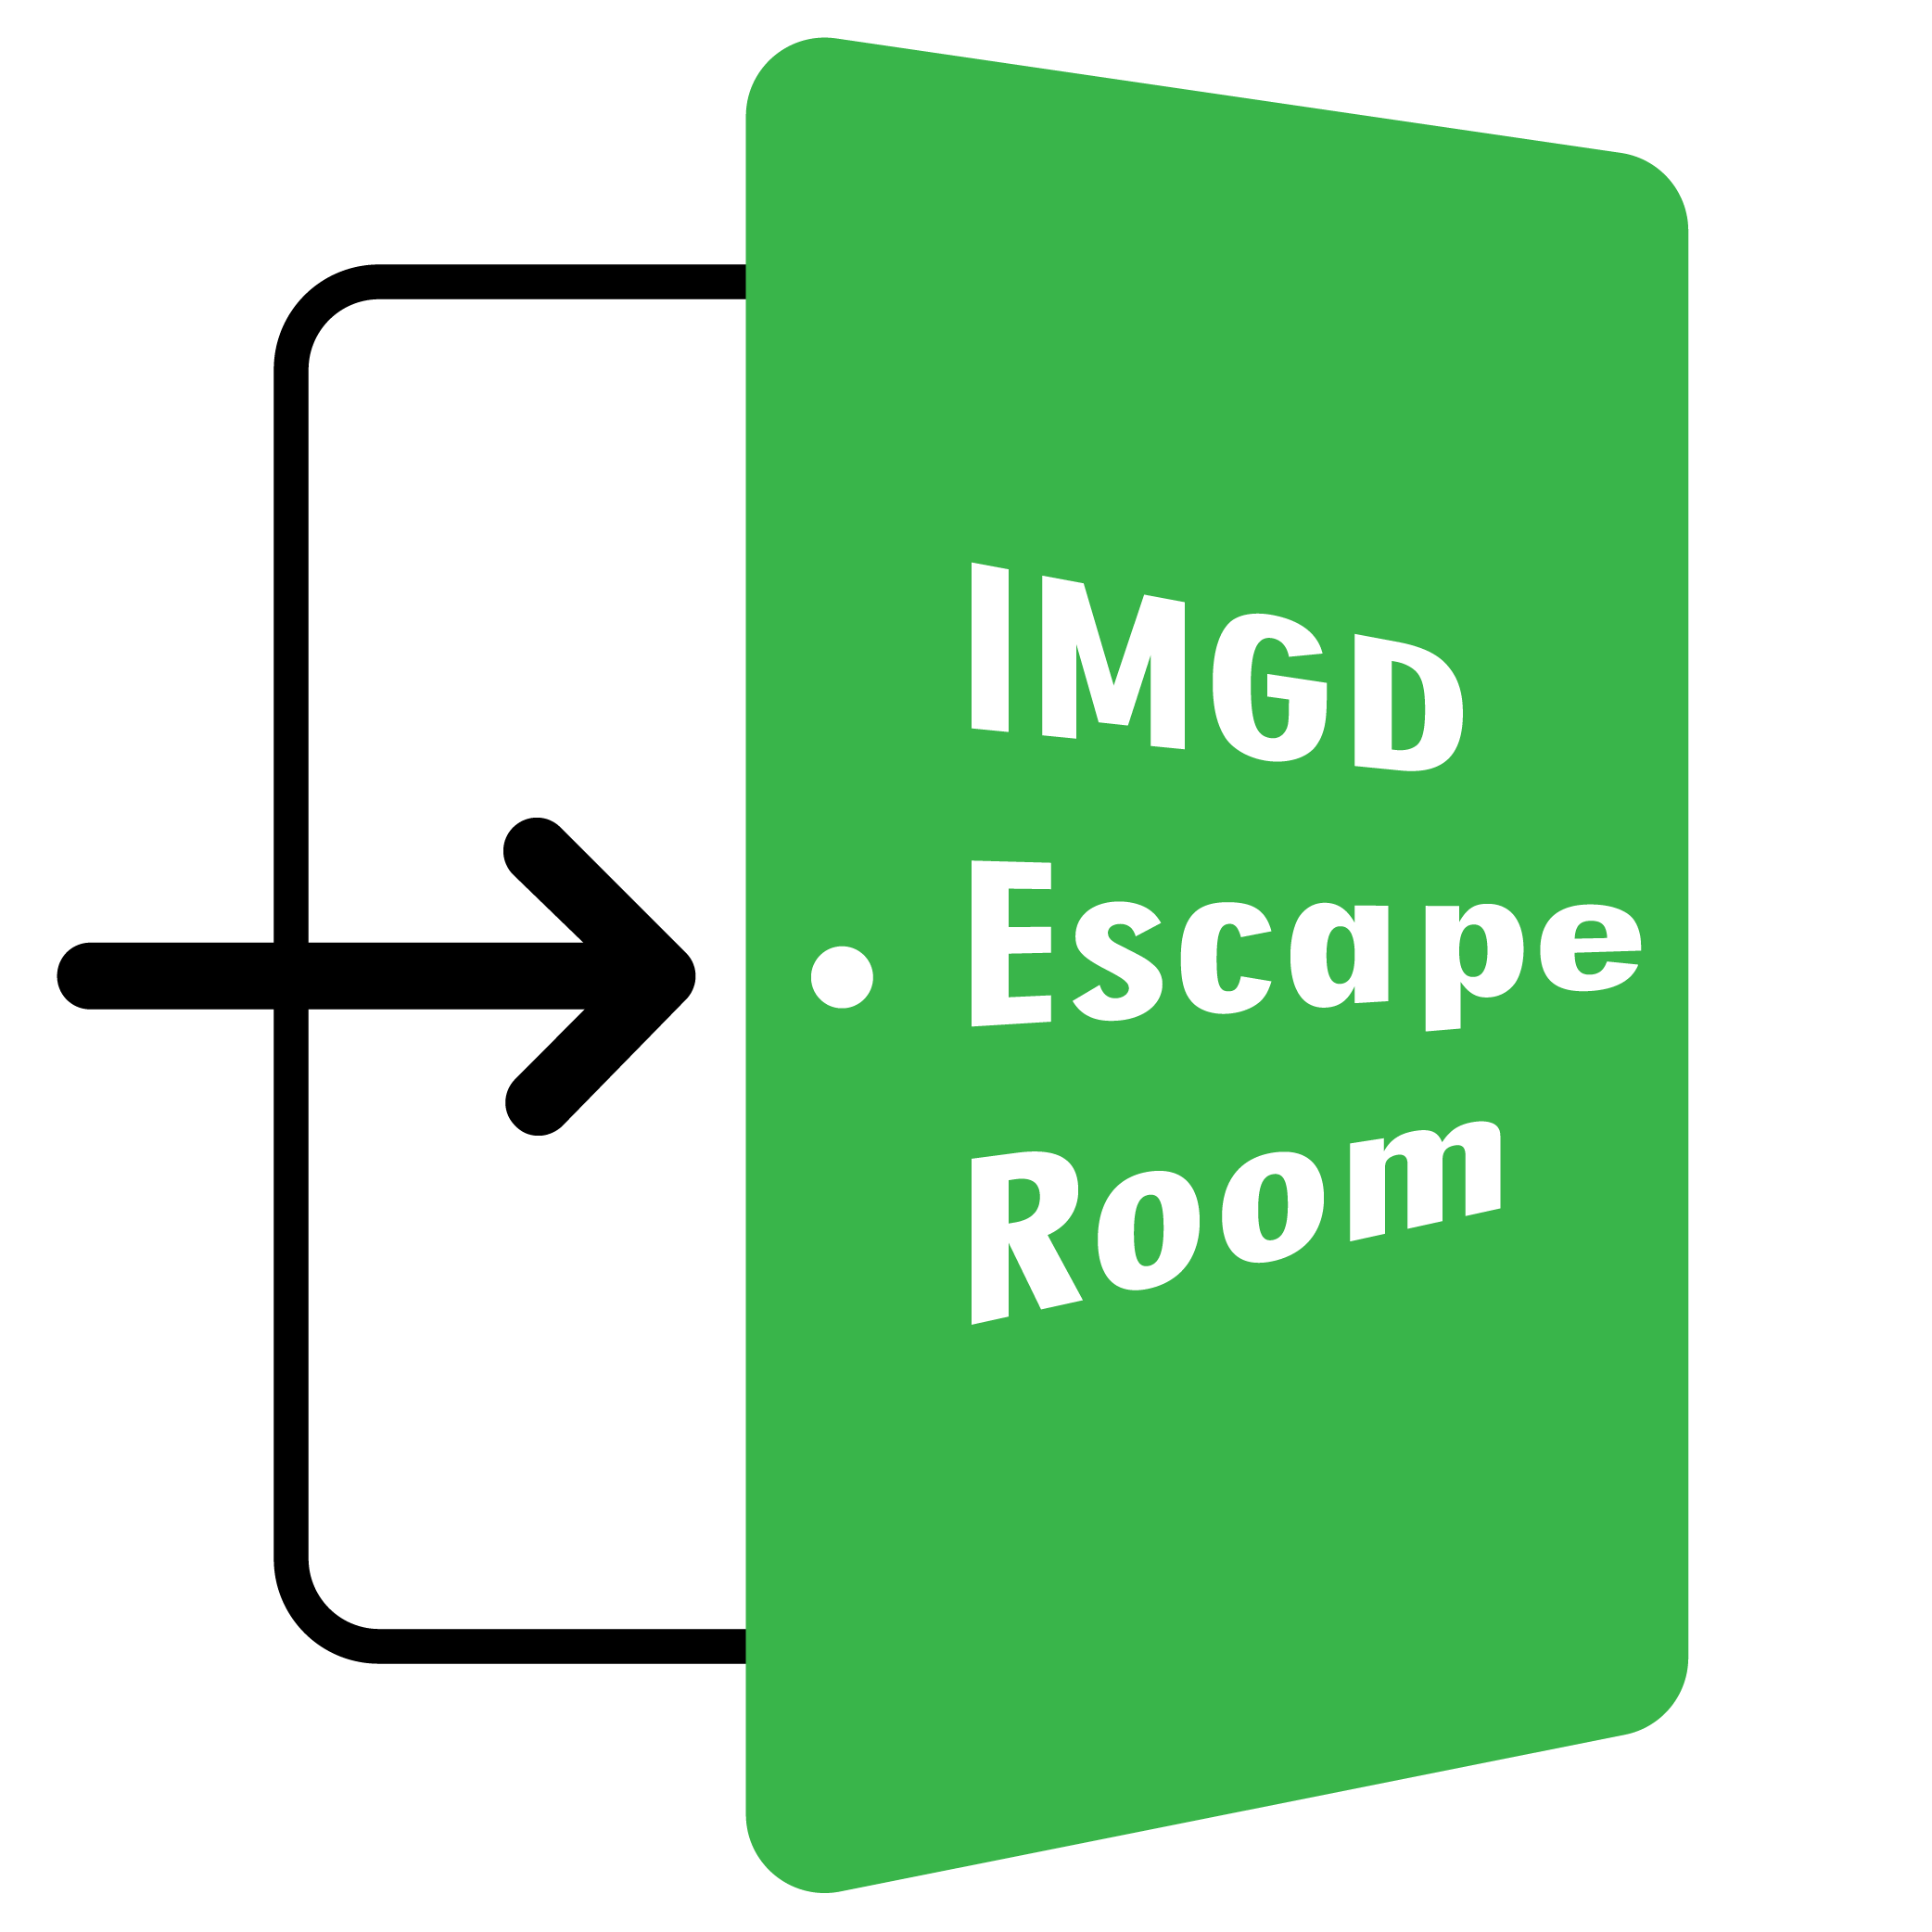 Escape room logo